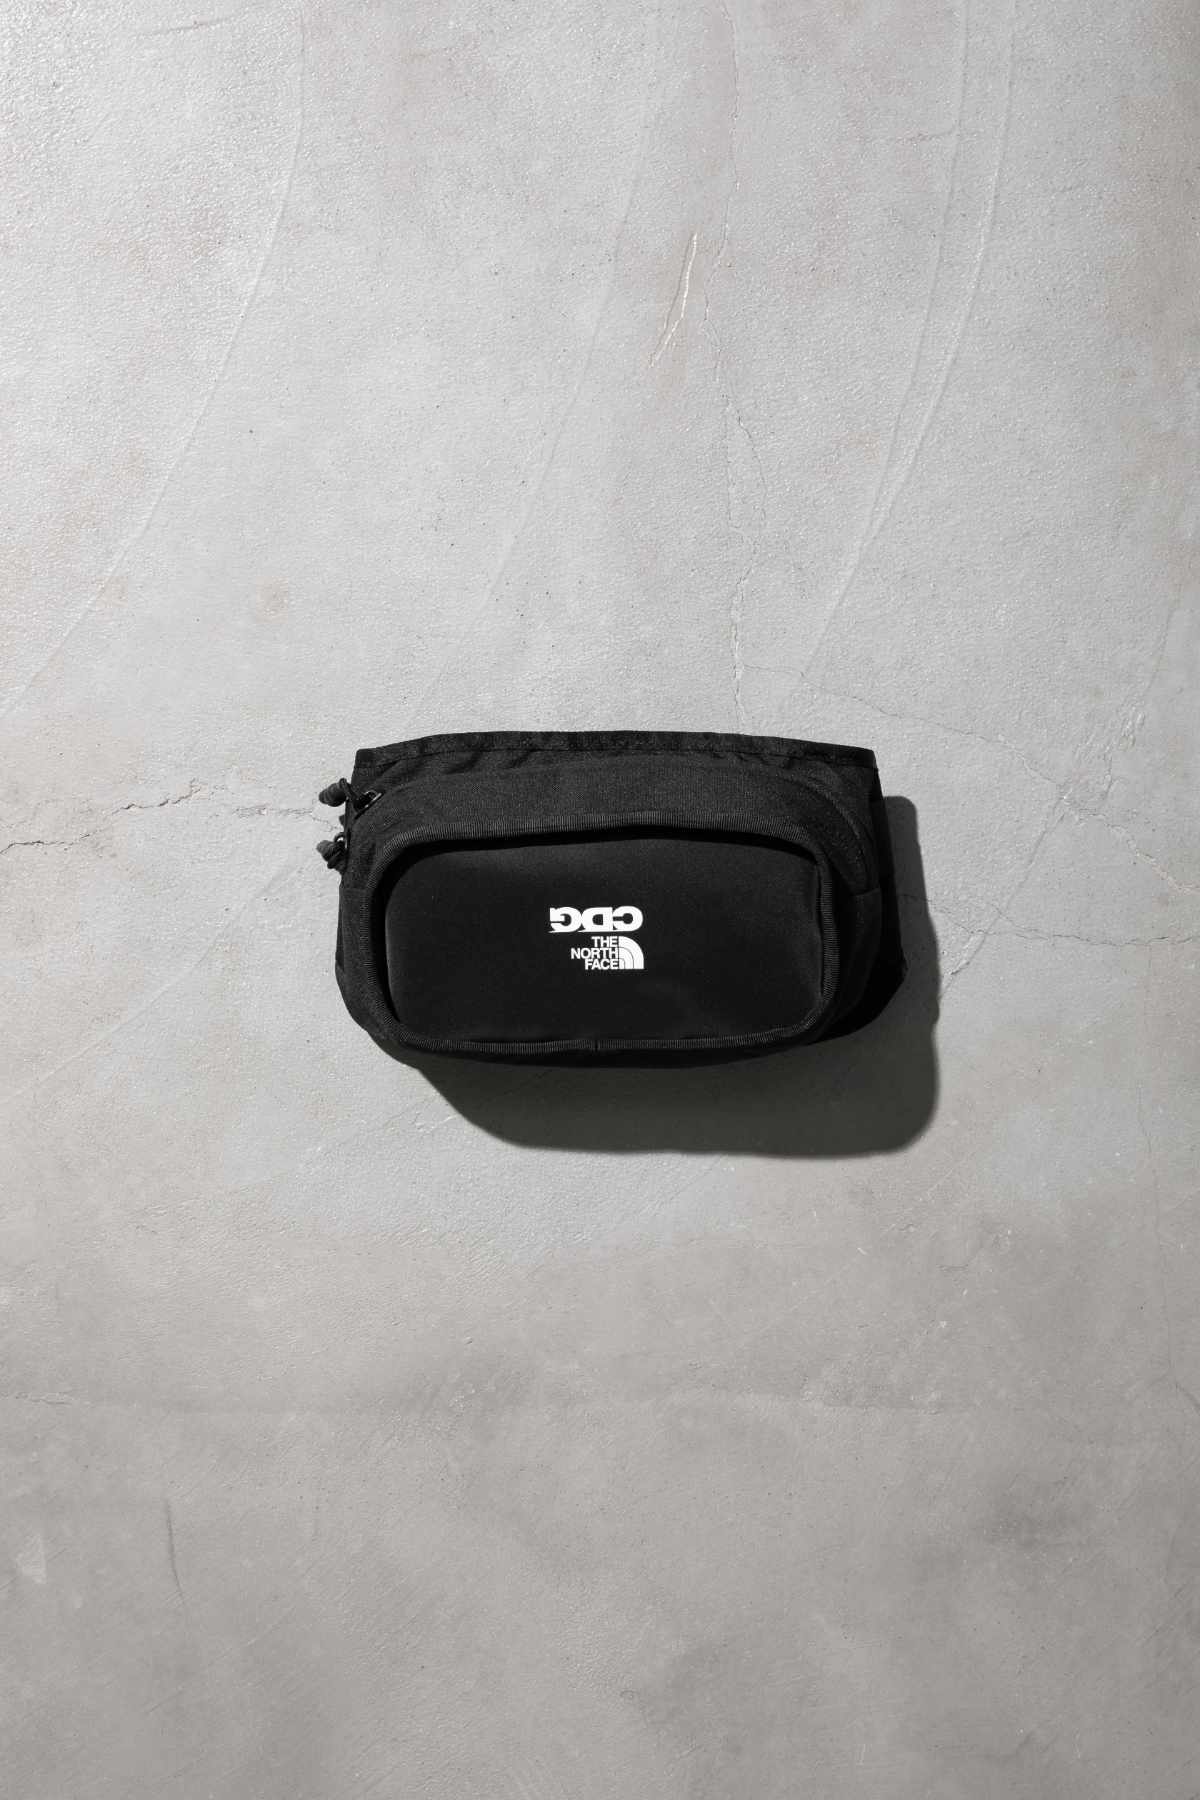 The CDG x TNF collab's black bag